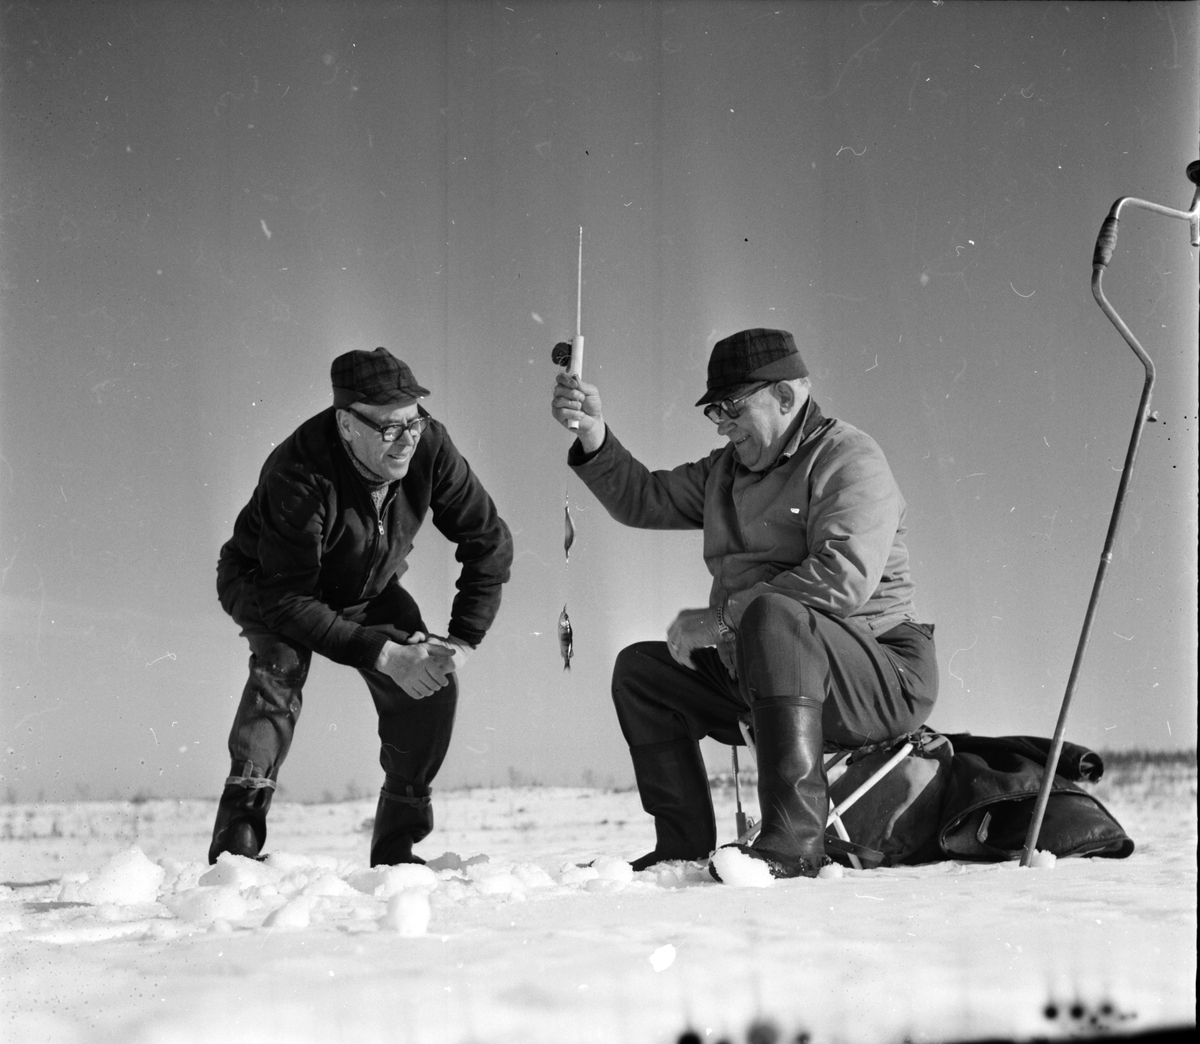 Fiske på Helsen,
P.W.H. Edvard Åkerlund, Lindor Enström,
Söderhamn,
13 Mars 1965